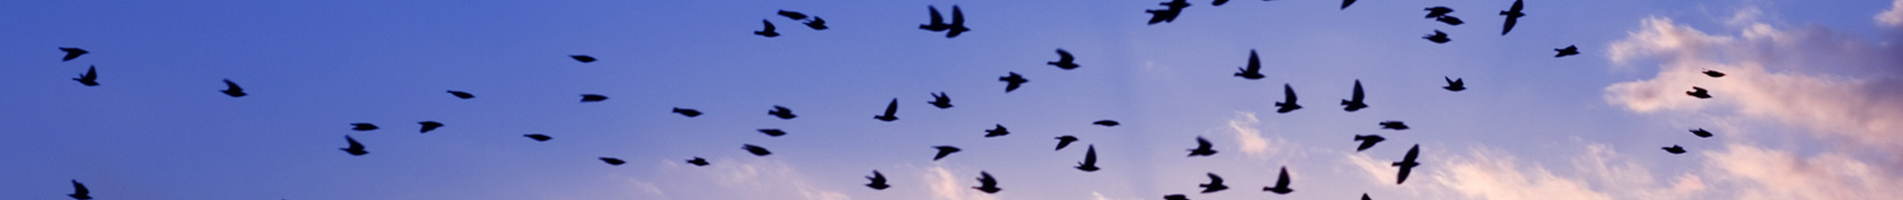 seo-migration-birds